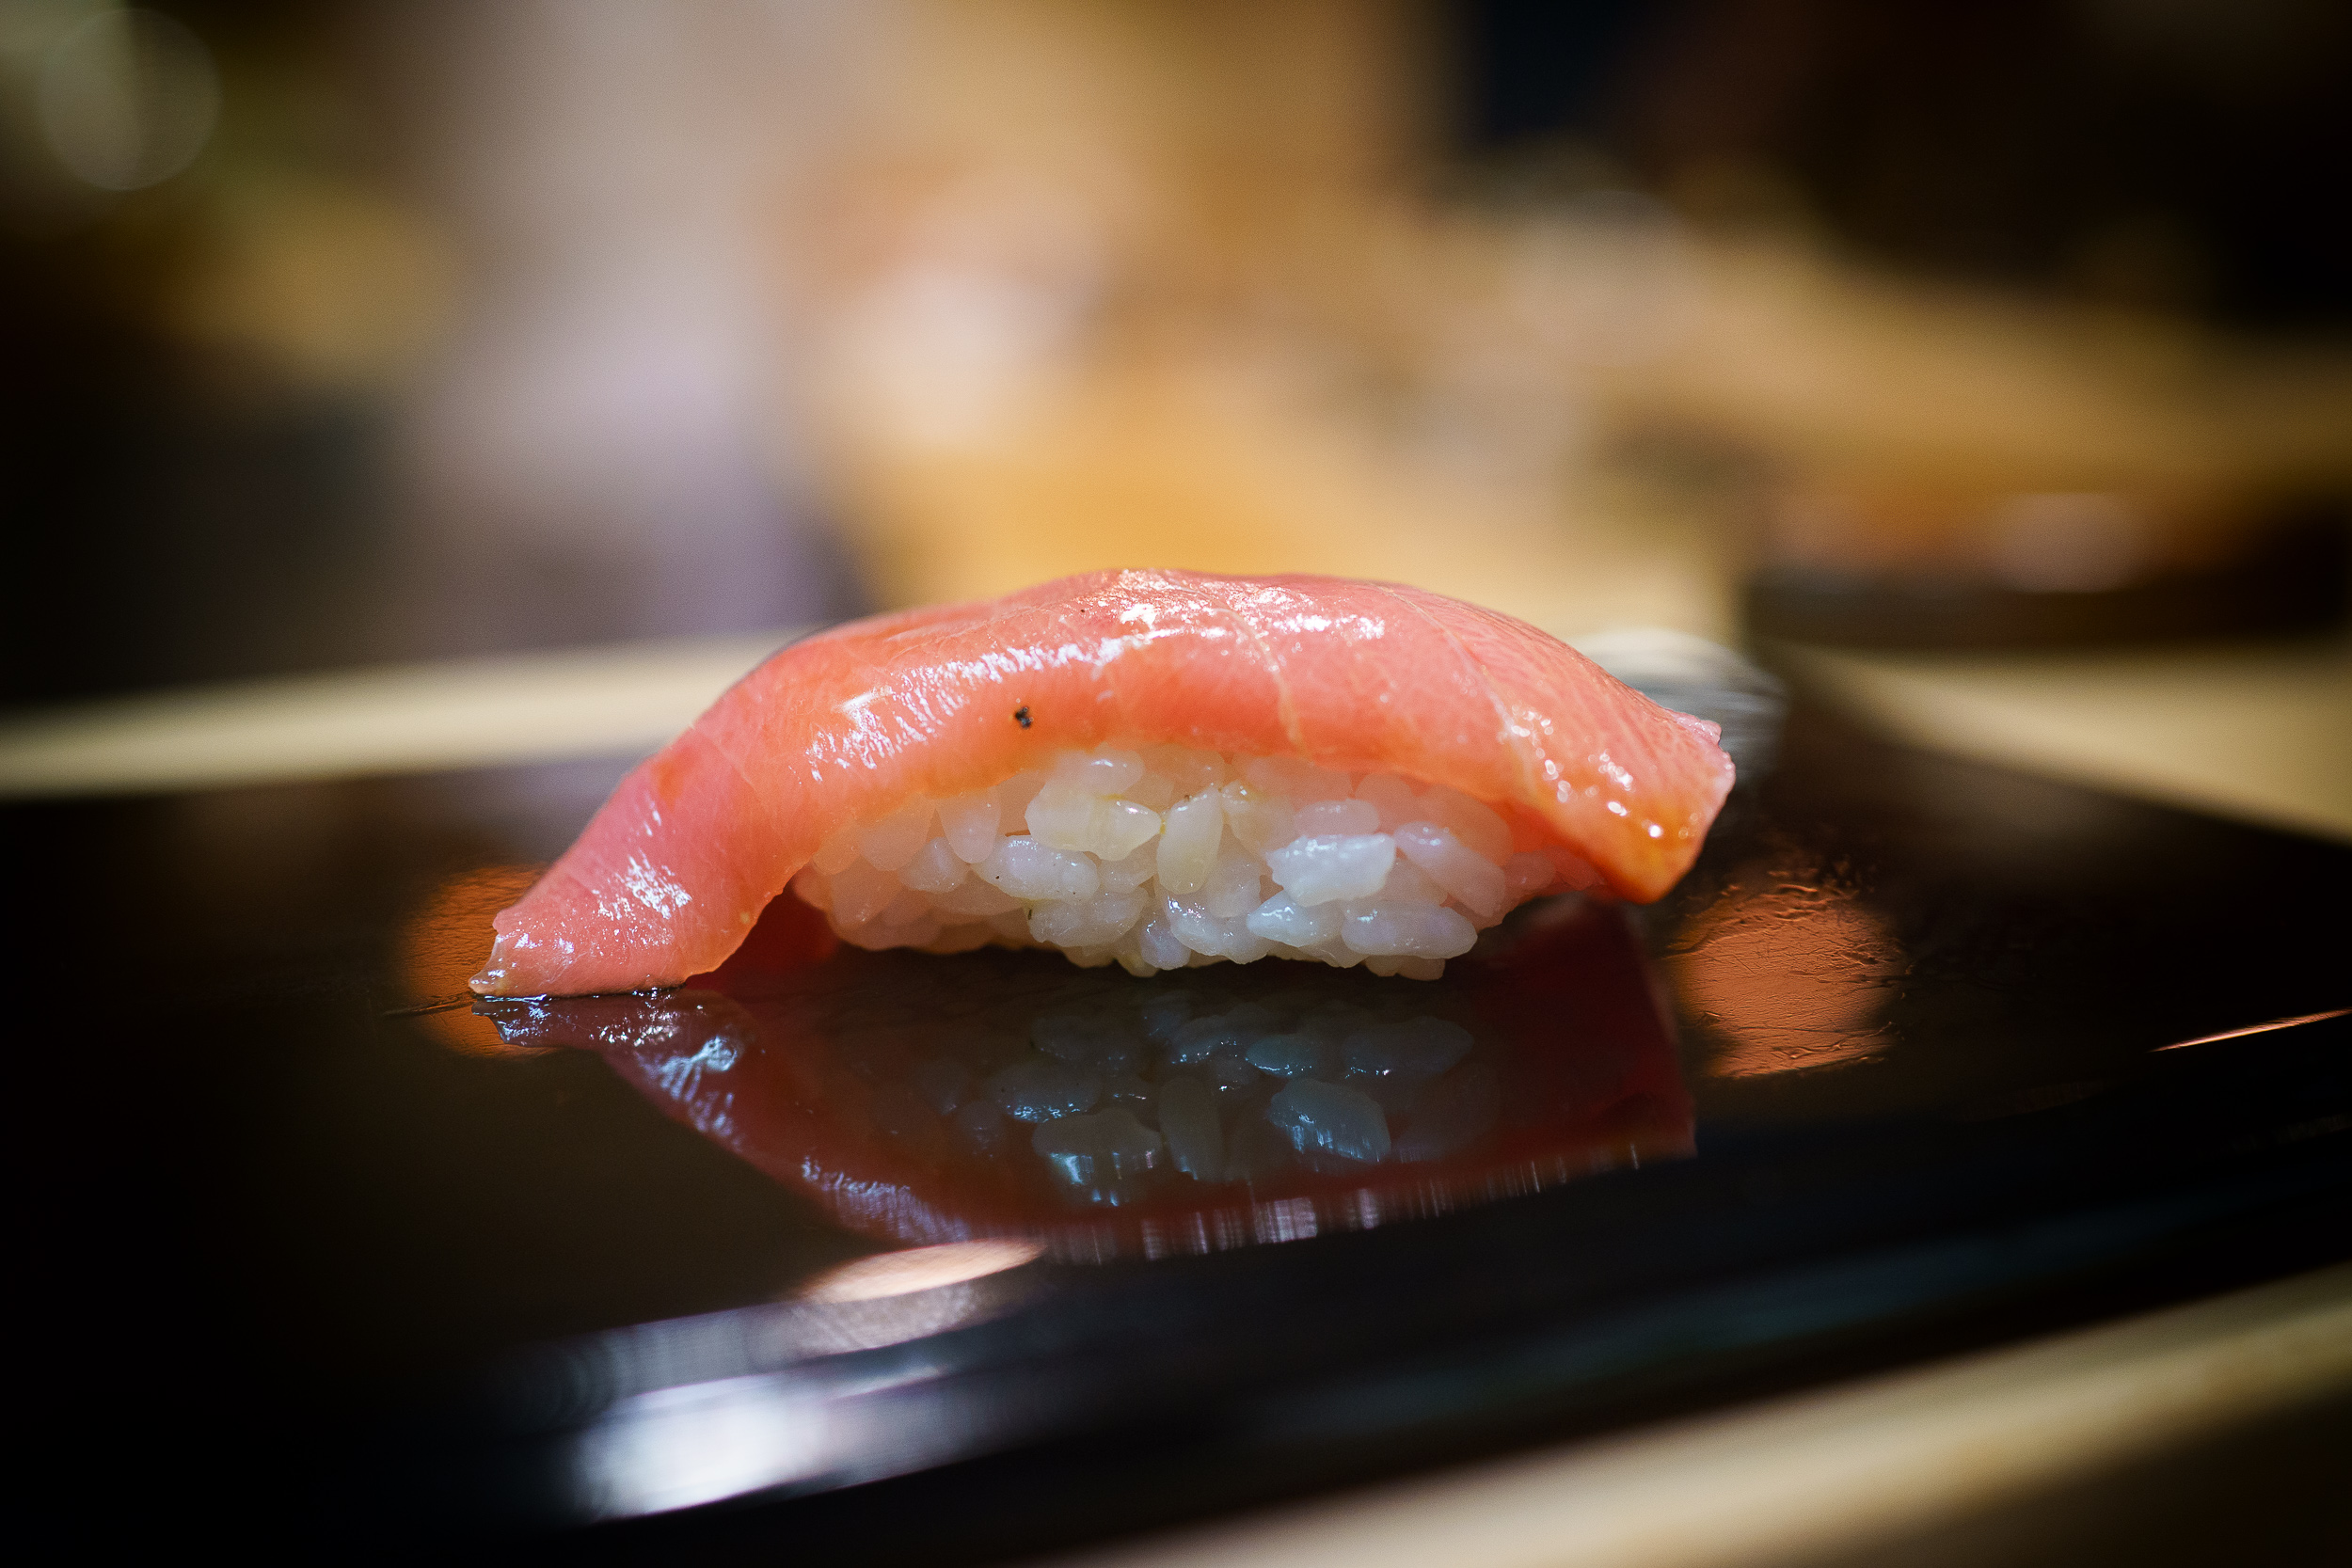 6th Course: Chuo-toro (medium fatty tuna)